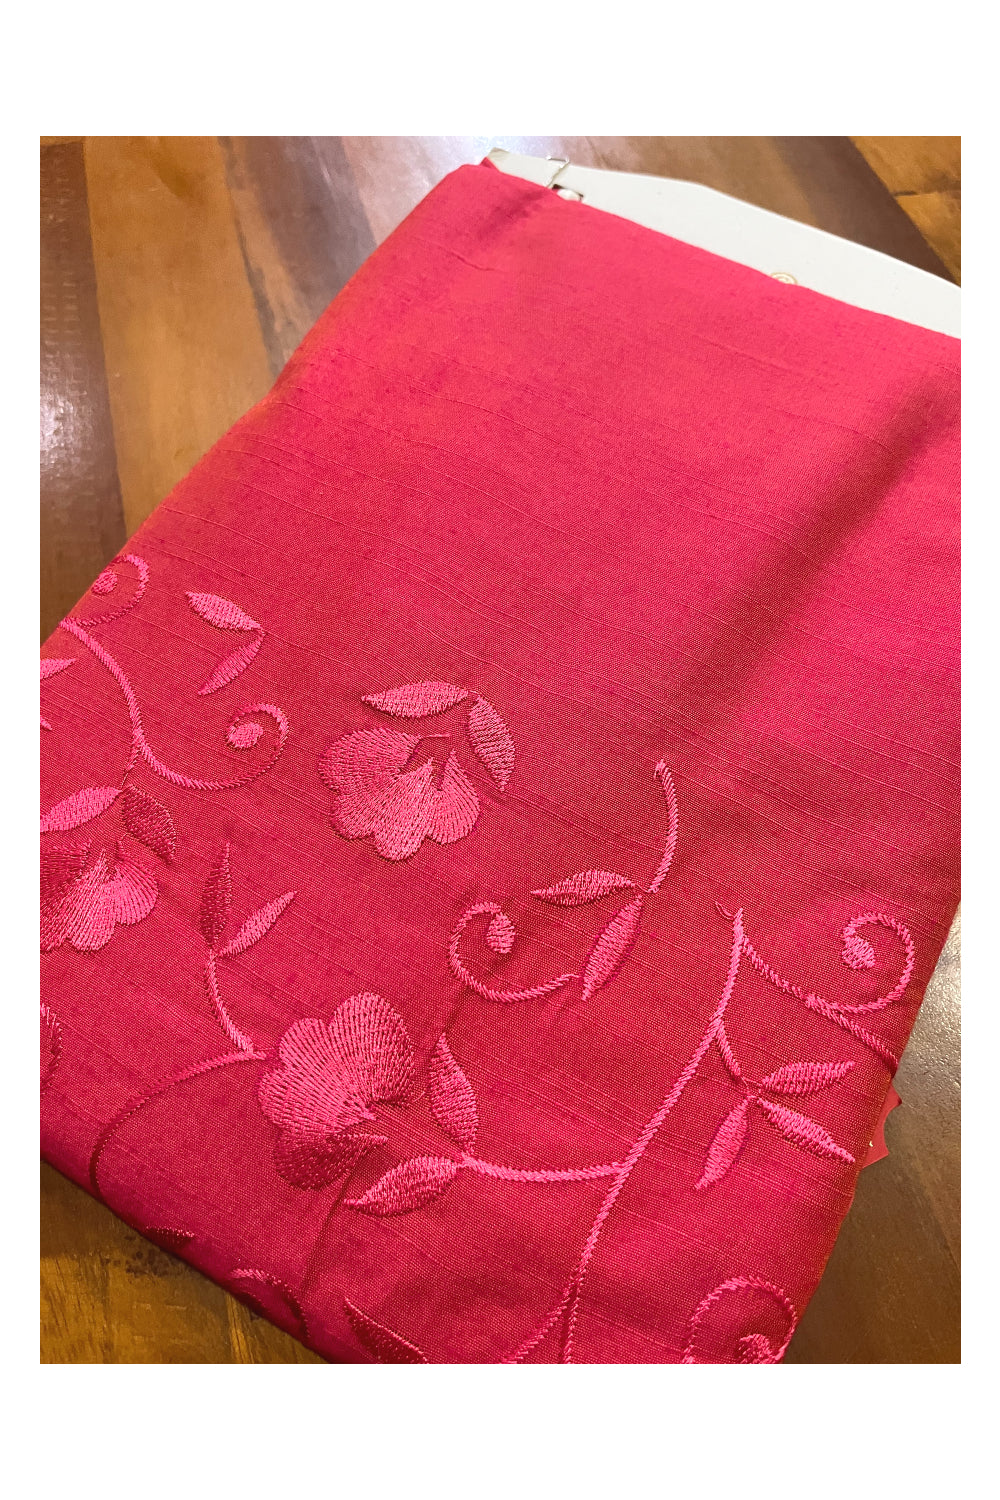 Southloom Pinkish Red Floral Woven Semi Silk Short Kurta for Men